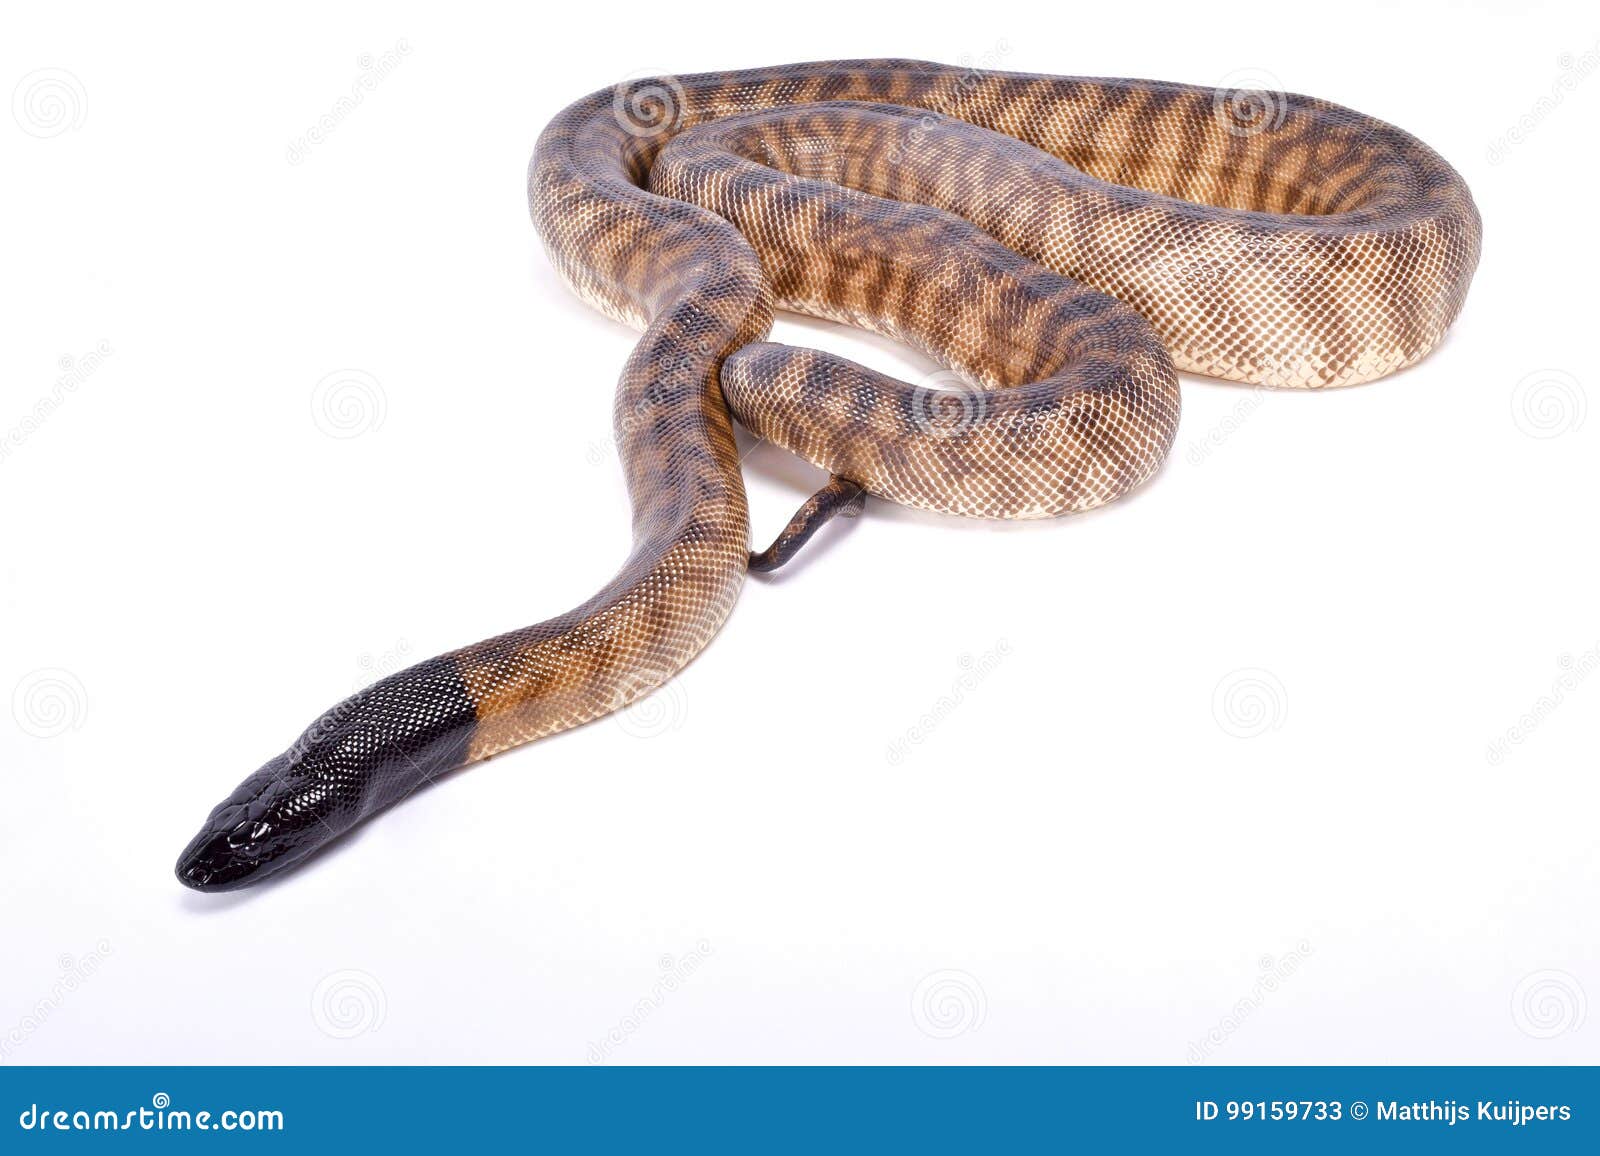 black-headed python, aspidites melanocephalus